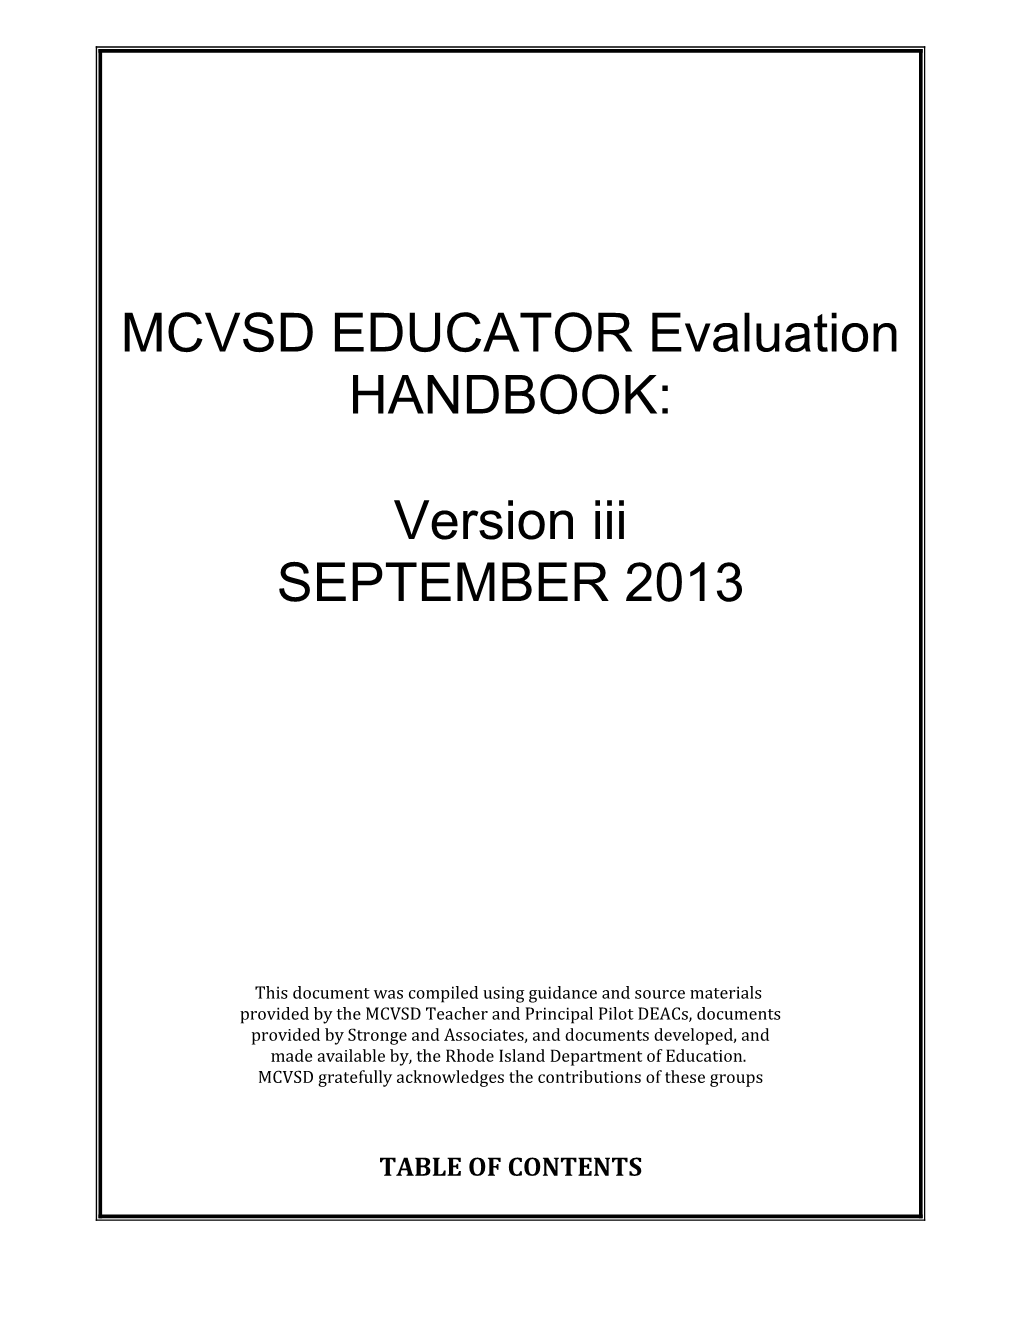 MCVSD EDUCATOR Evaluation HANDBOOK